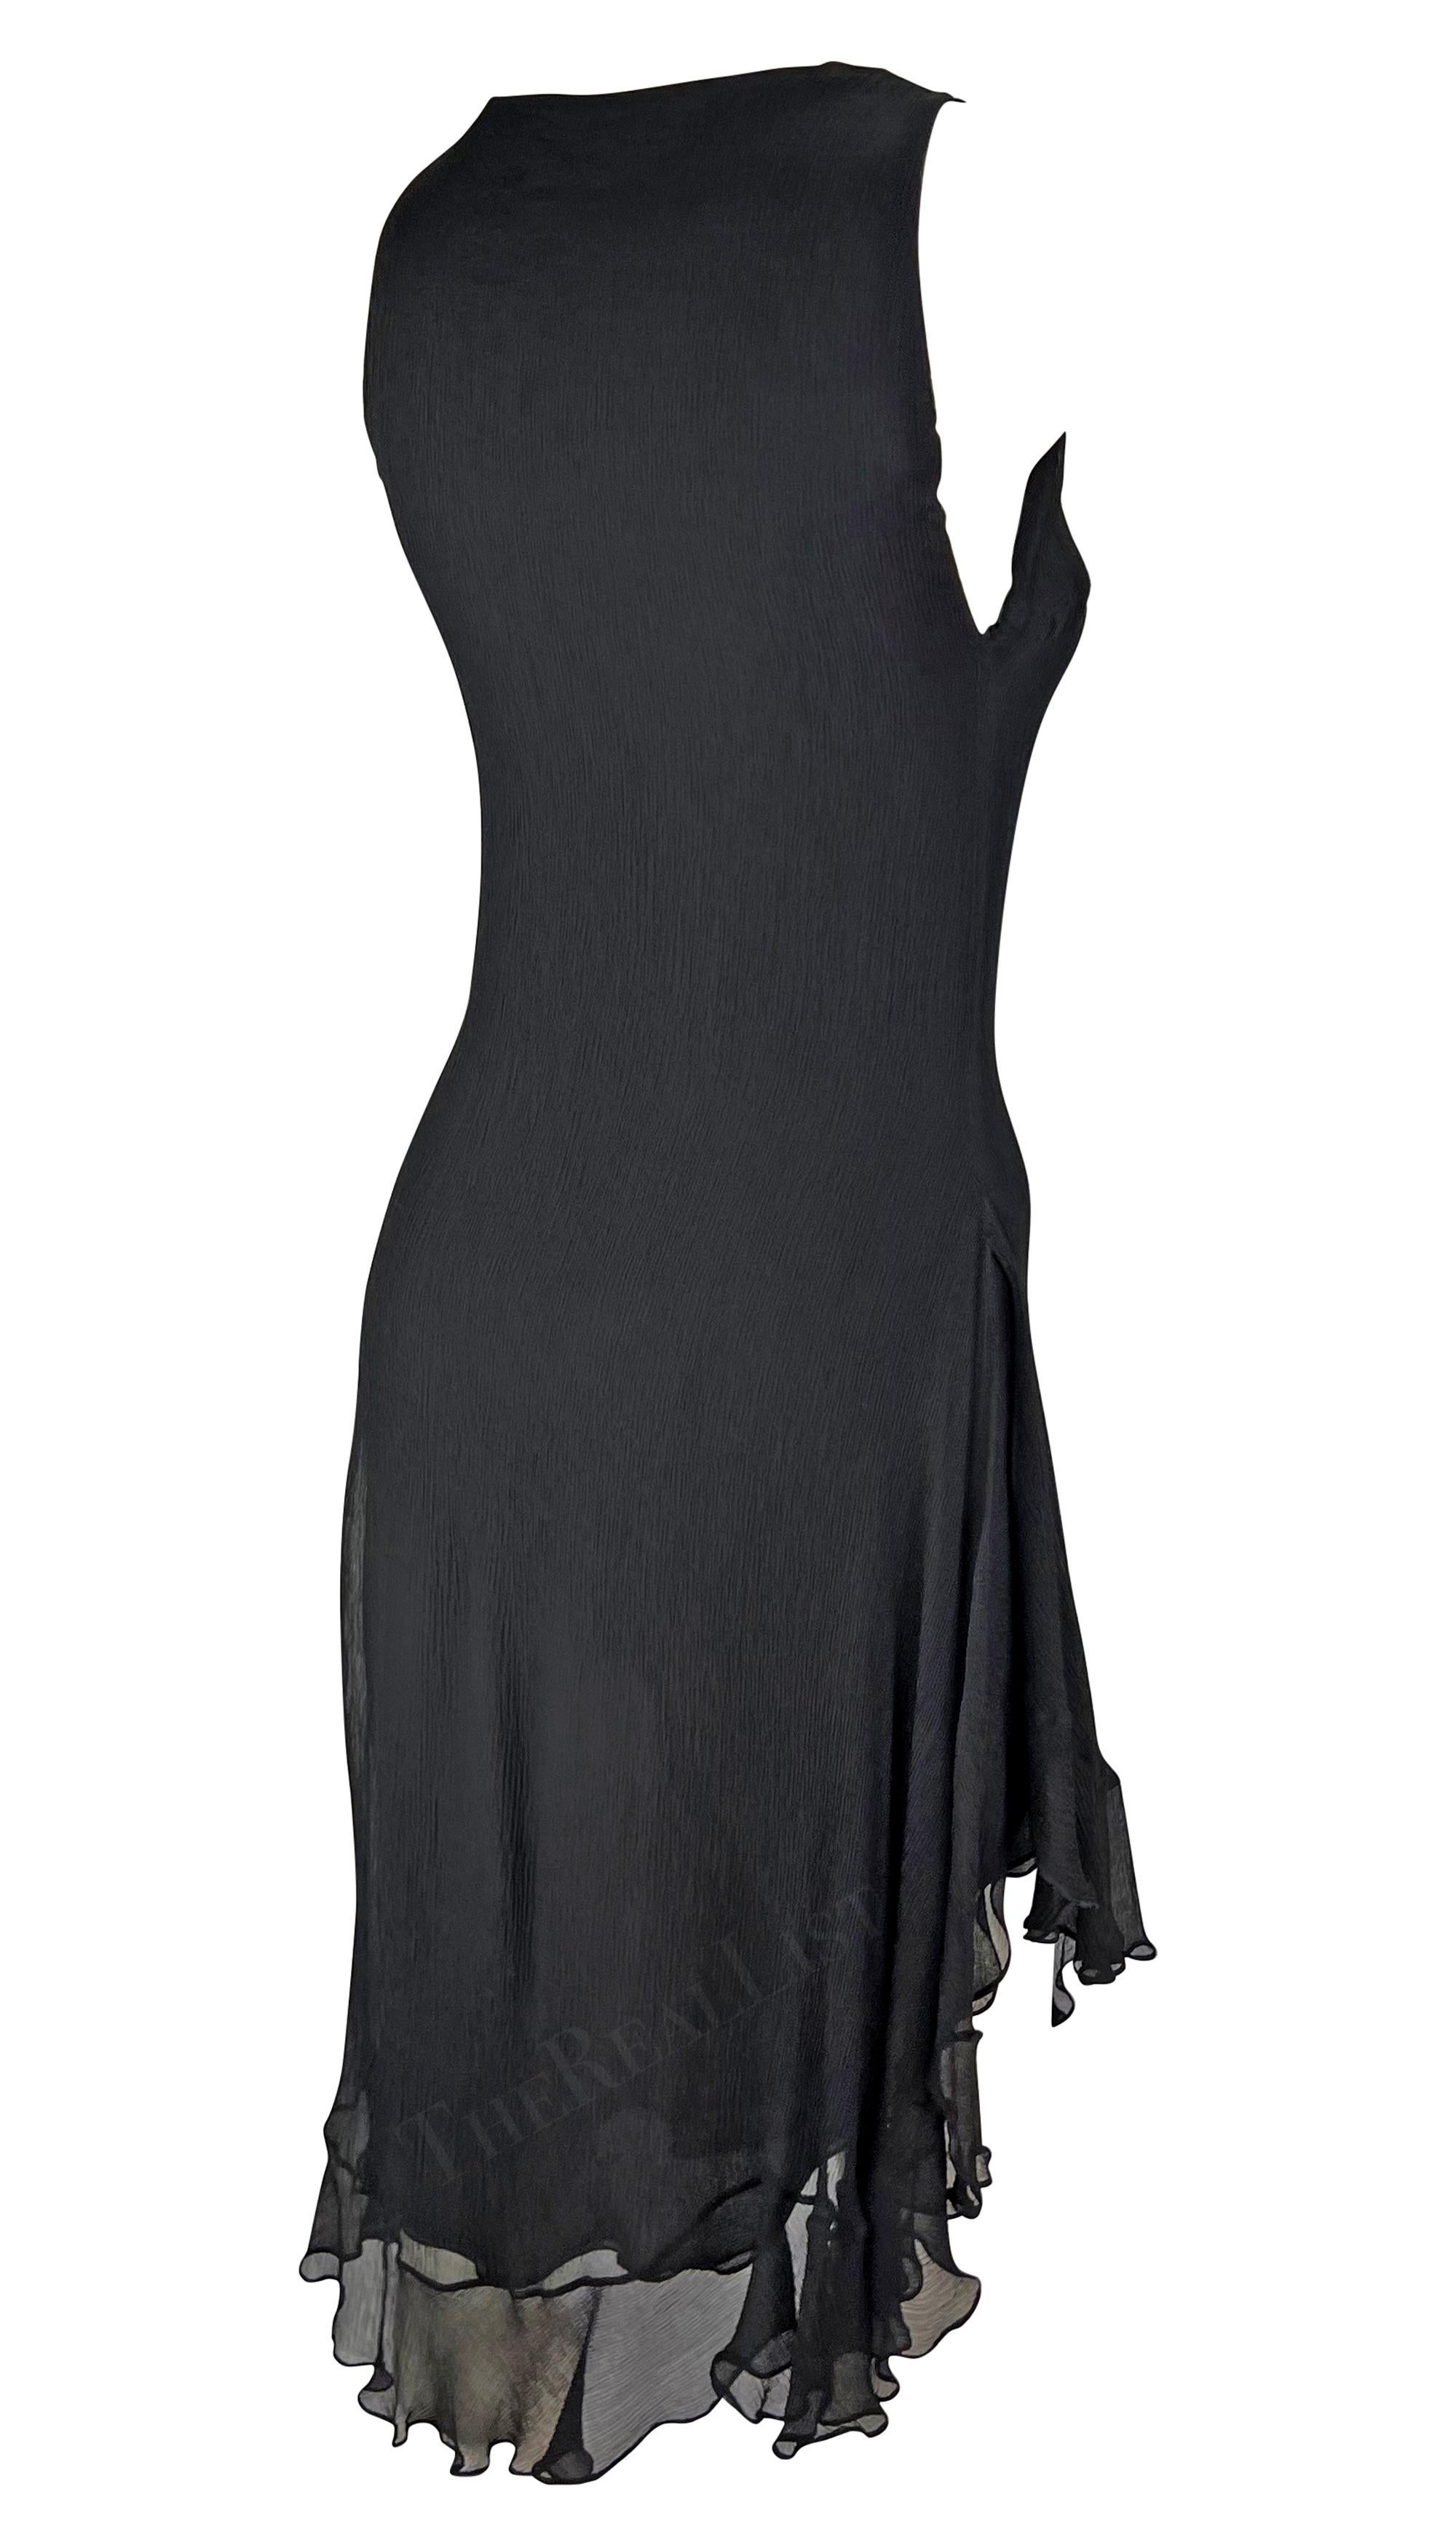 S/S 2000 Gucci by Tom Ford Black Crepe Silk Chiffon Ruffle Dress 1